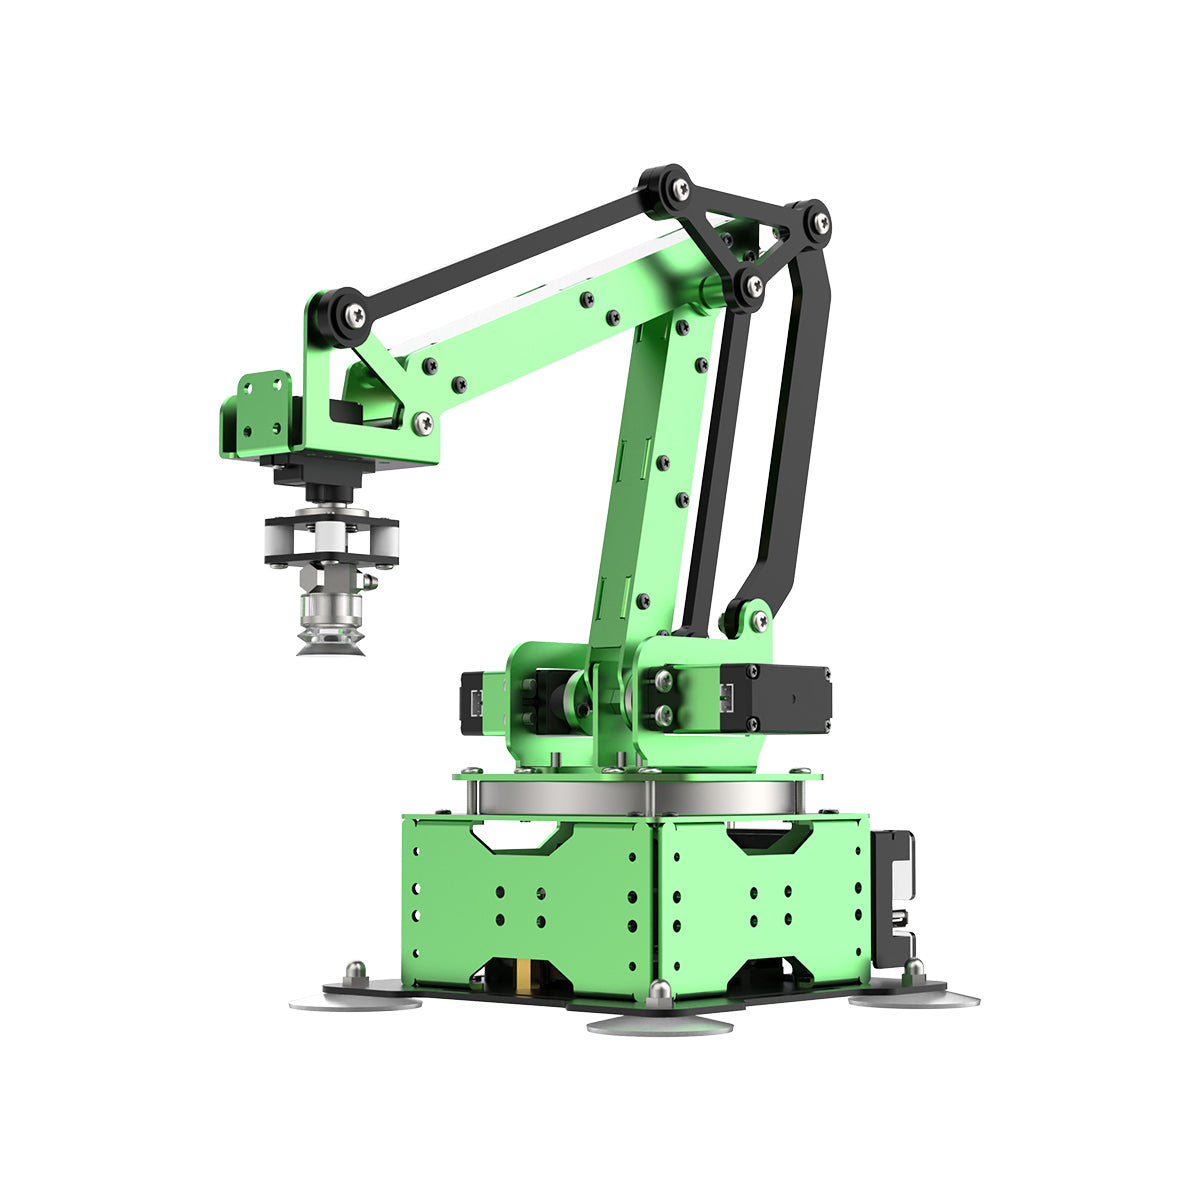 Hiwonder Source Robot Arm by ESP32 Support Python